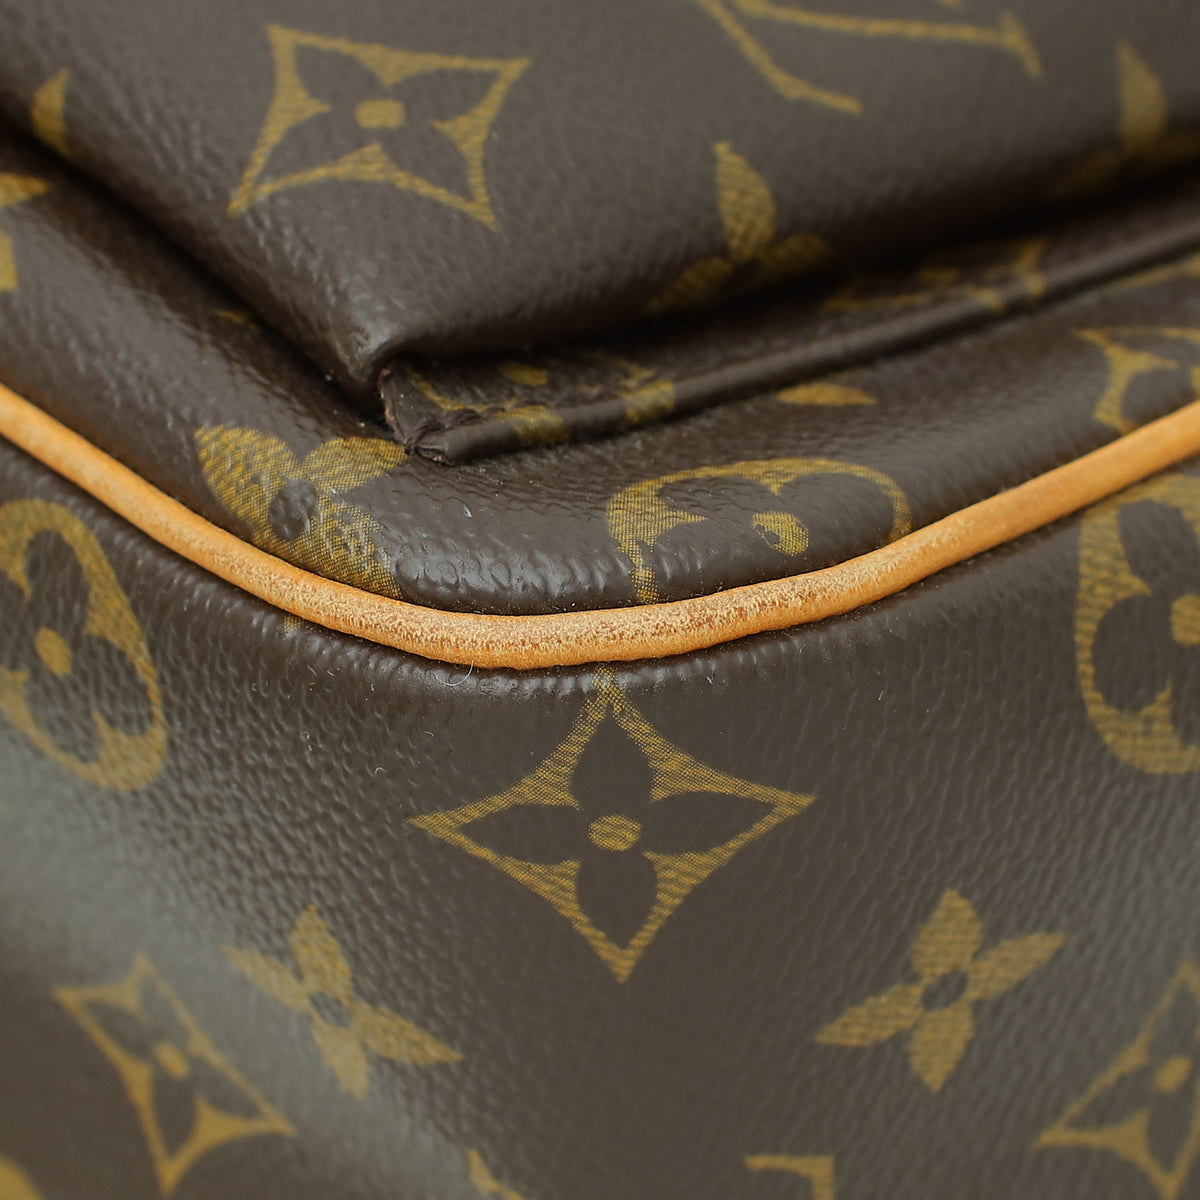 Louis Vuitton Monogram Viva Cite GM Bag